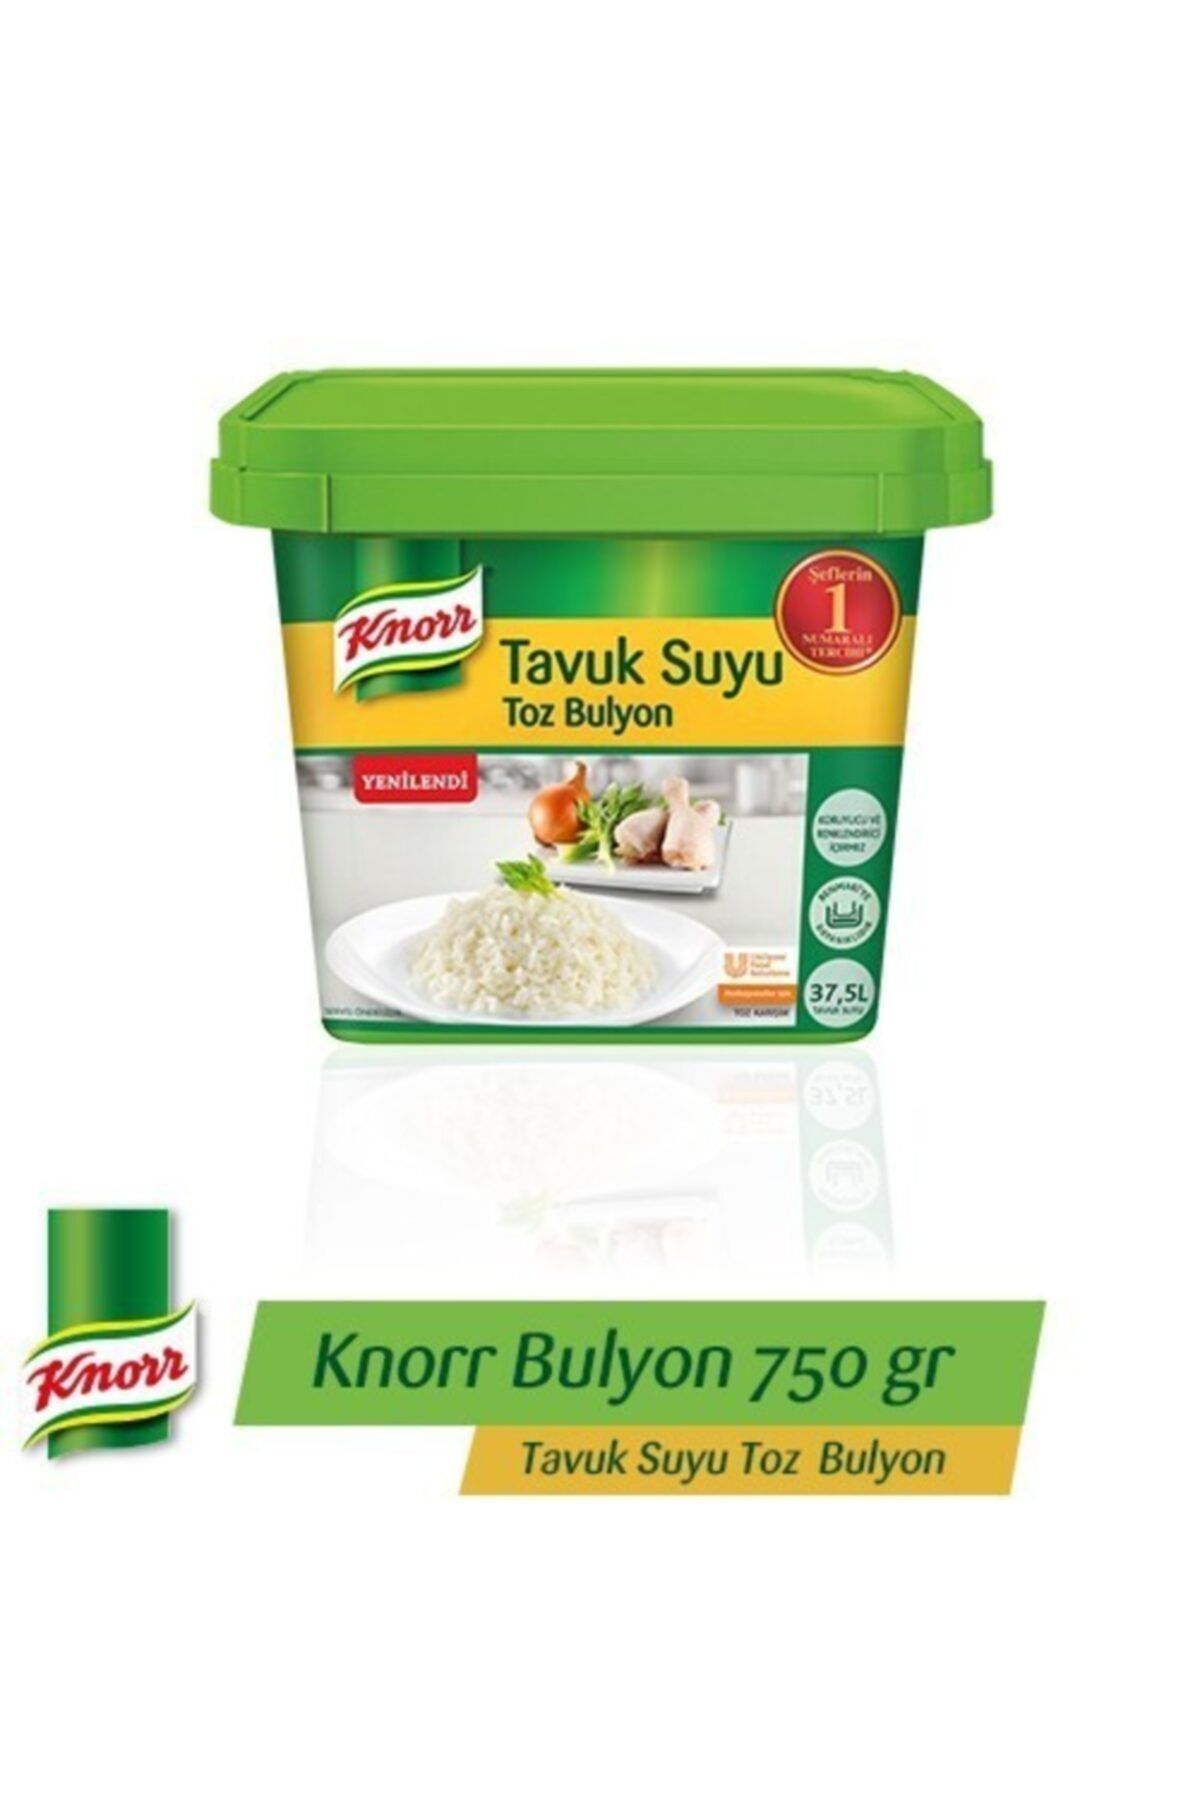 Knorr Tavuk Suyu Toz Bulyon 750 Gr.